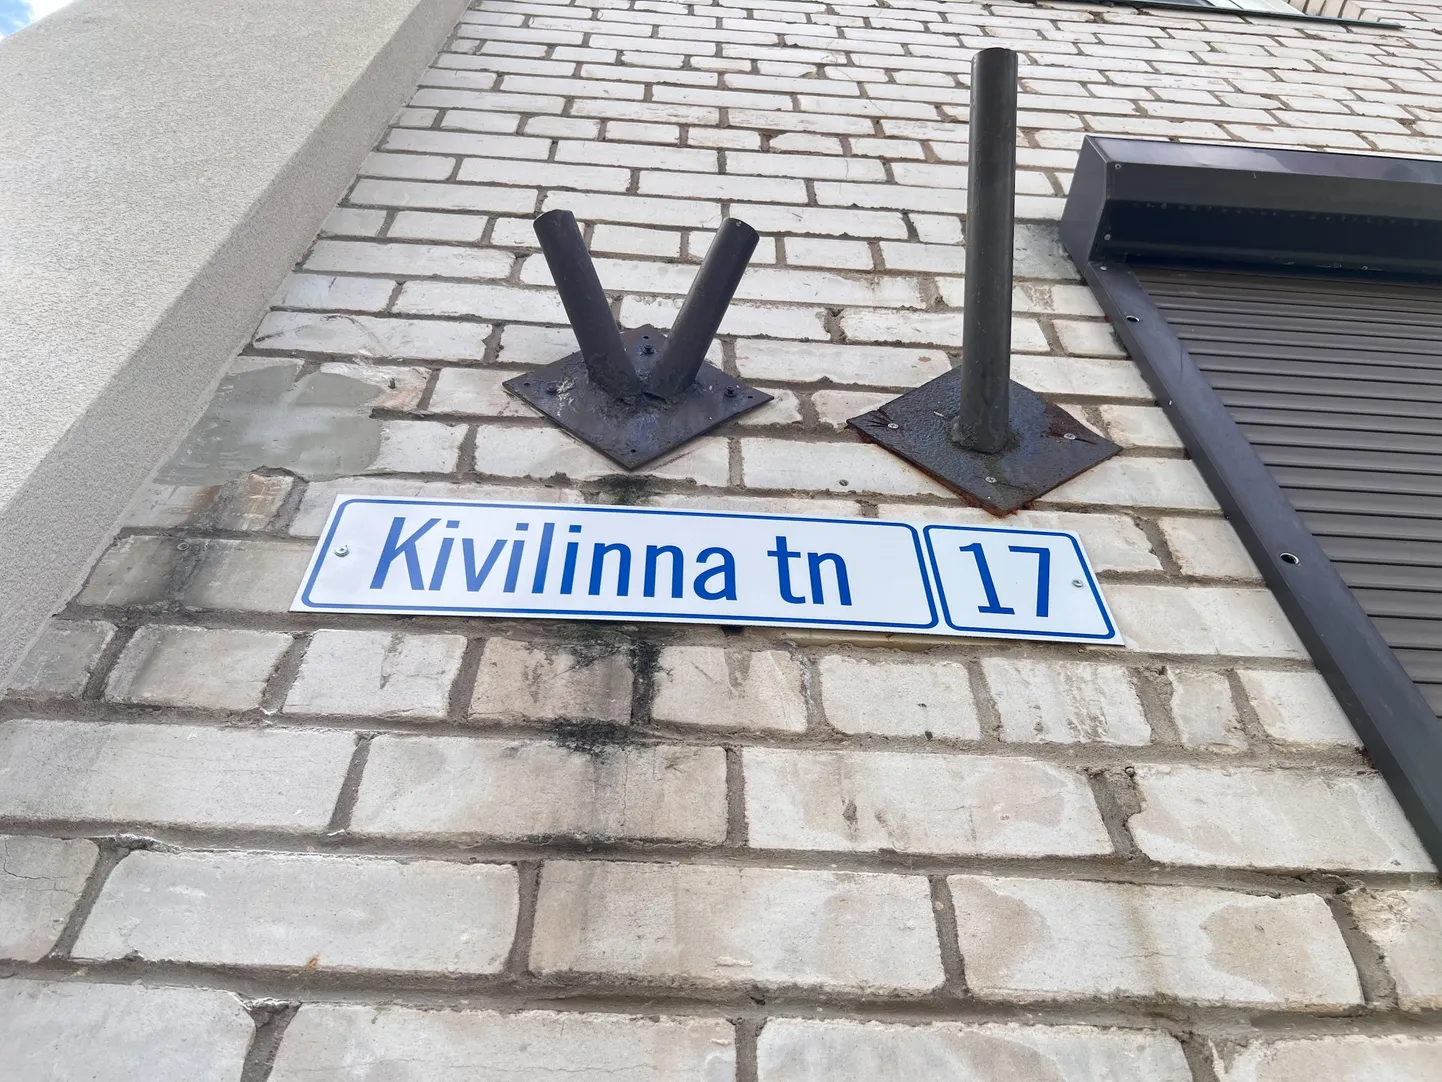 Улица Даумана в Нарве теперь носит название "Улица Кивилинна".